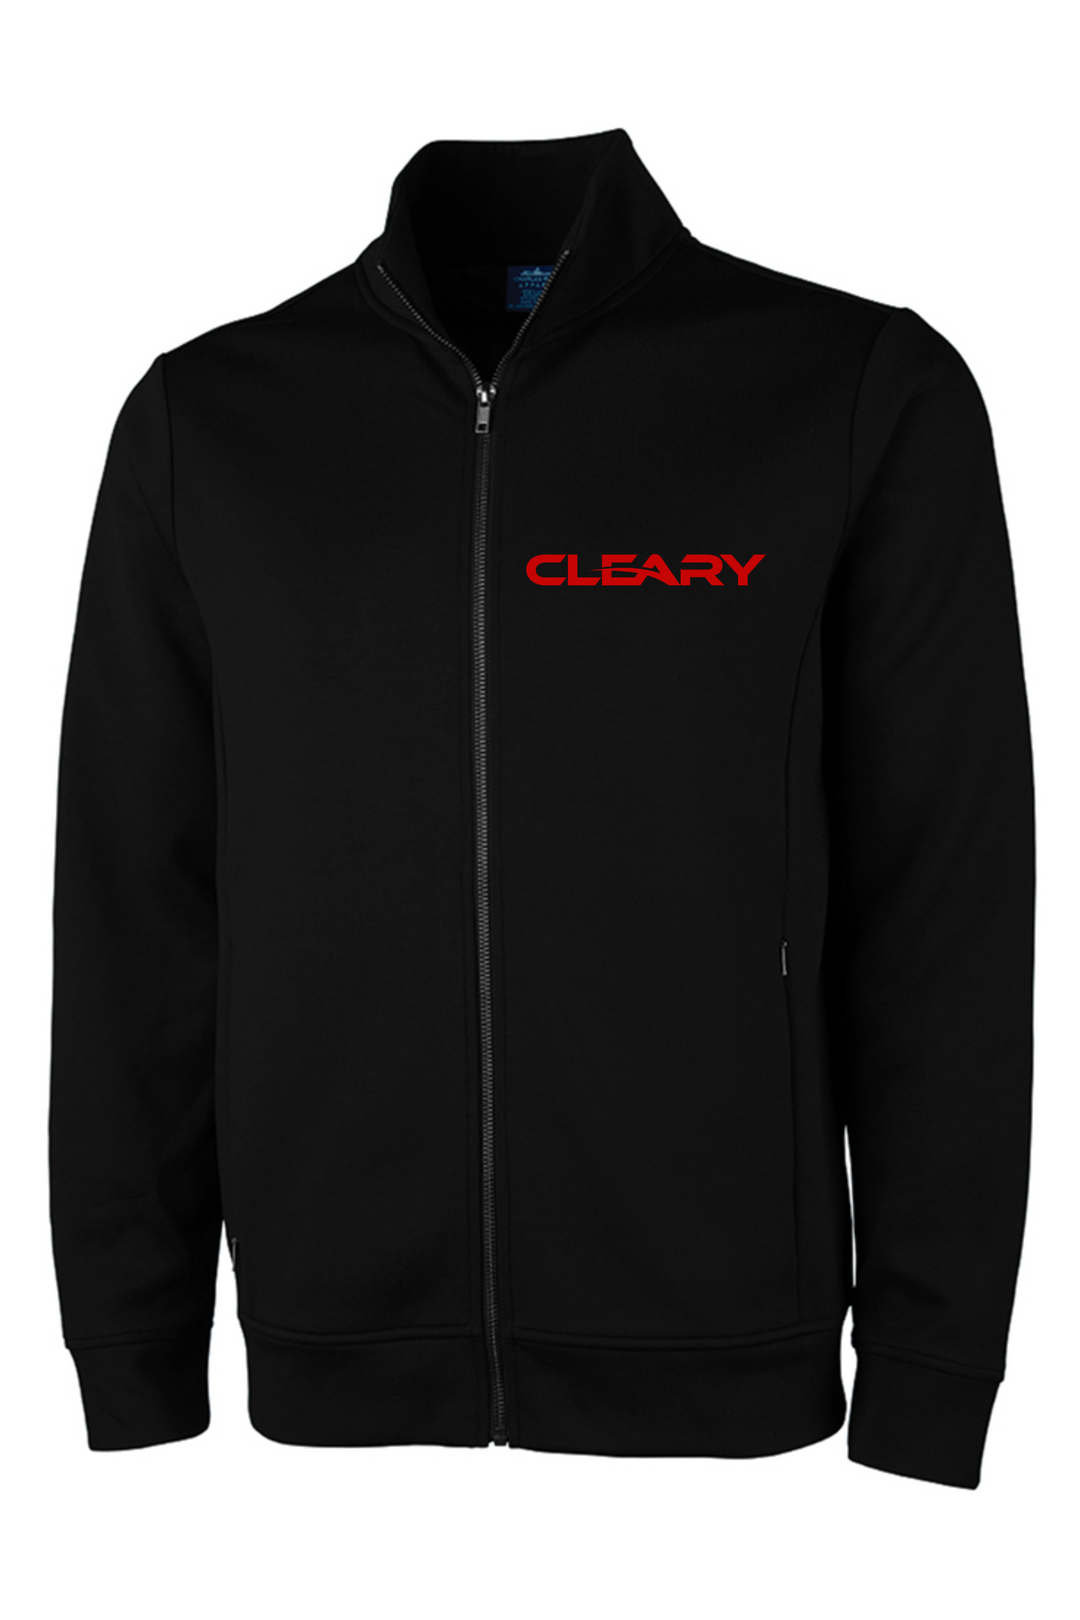 Cleary's Men's Seaport Full Zip Performance Jacket Black